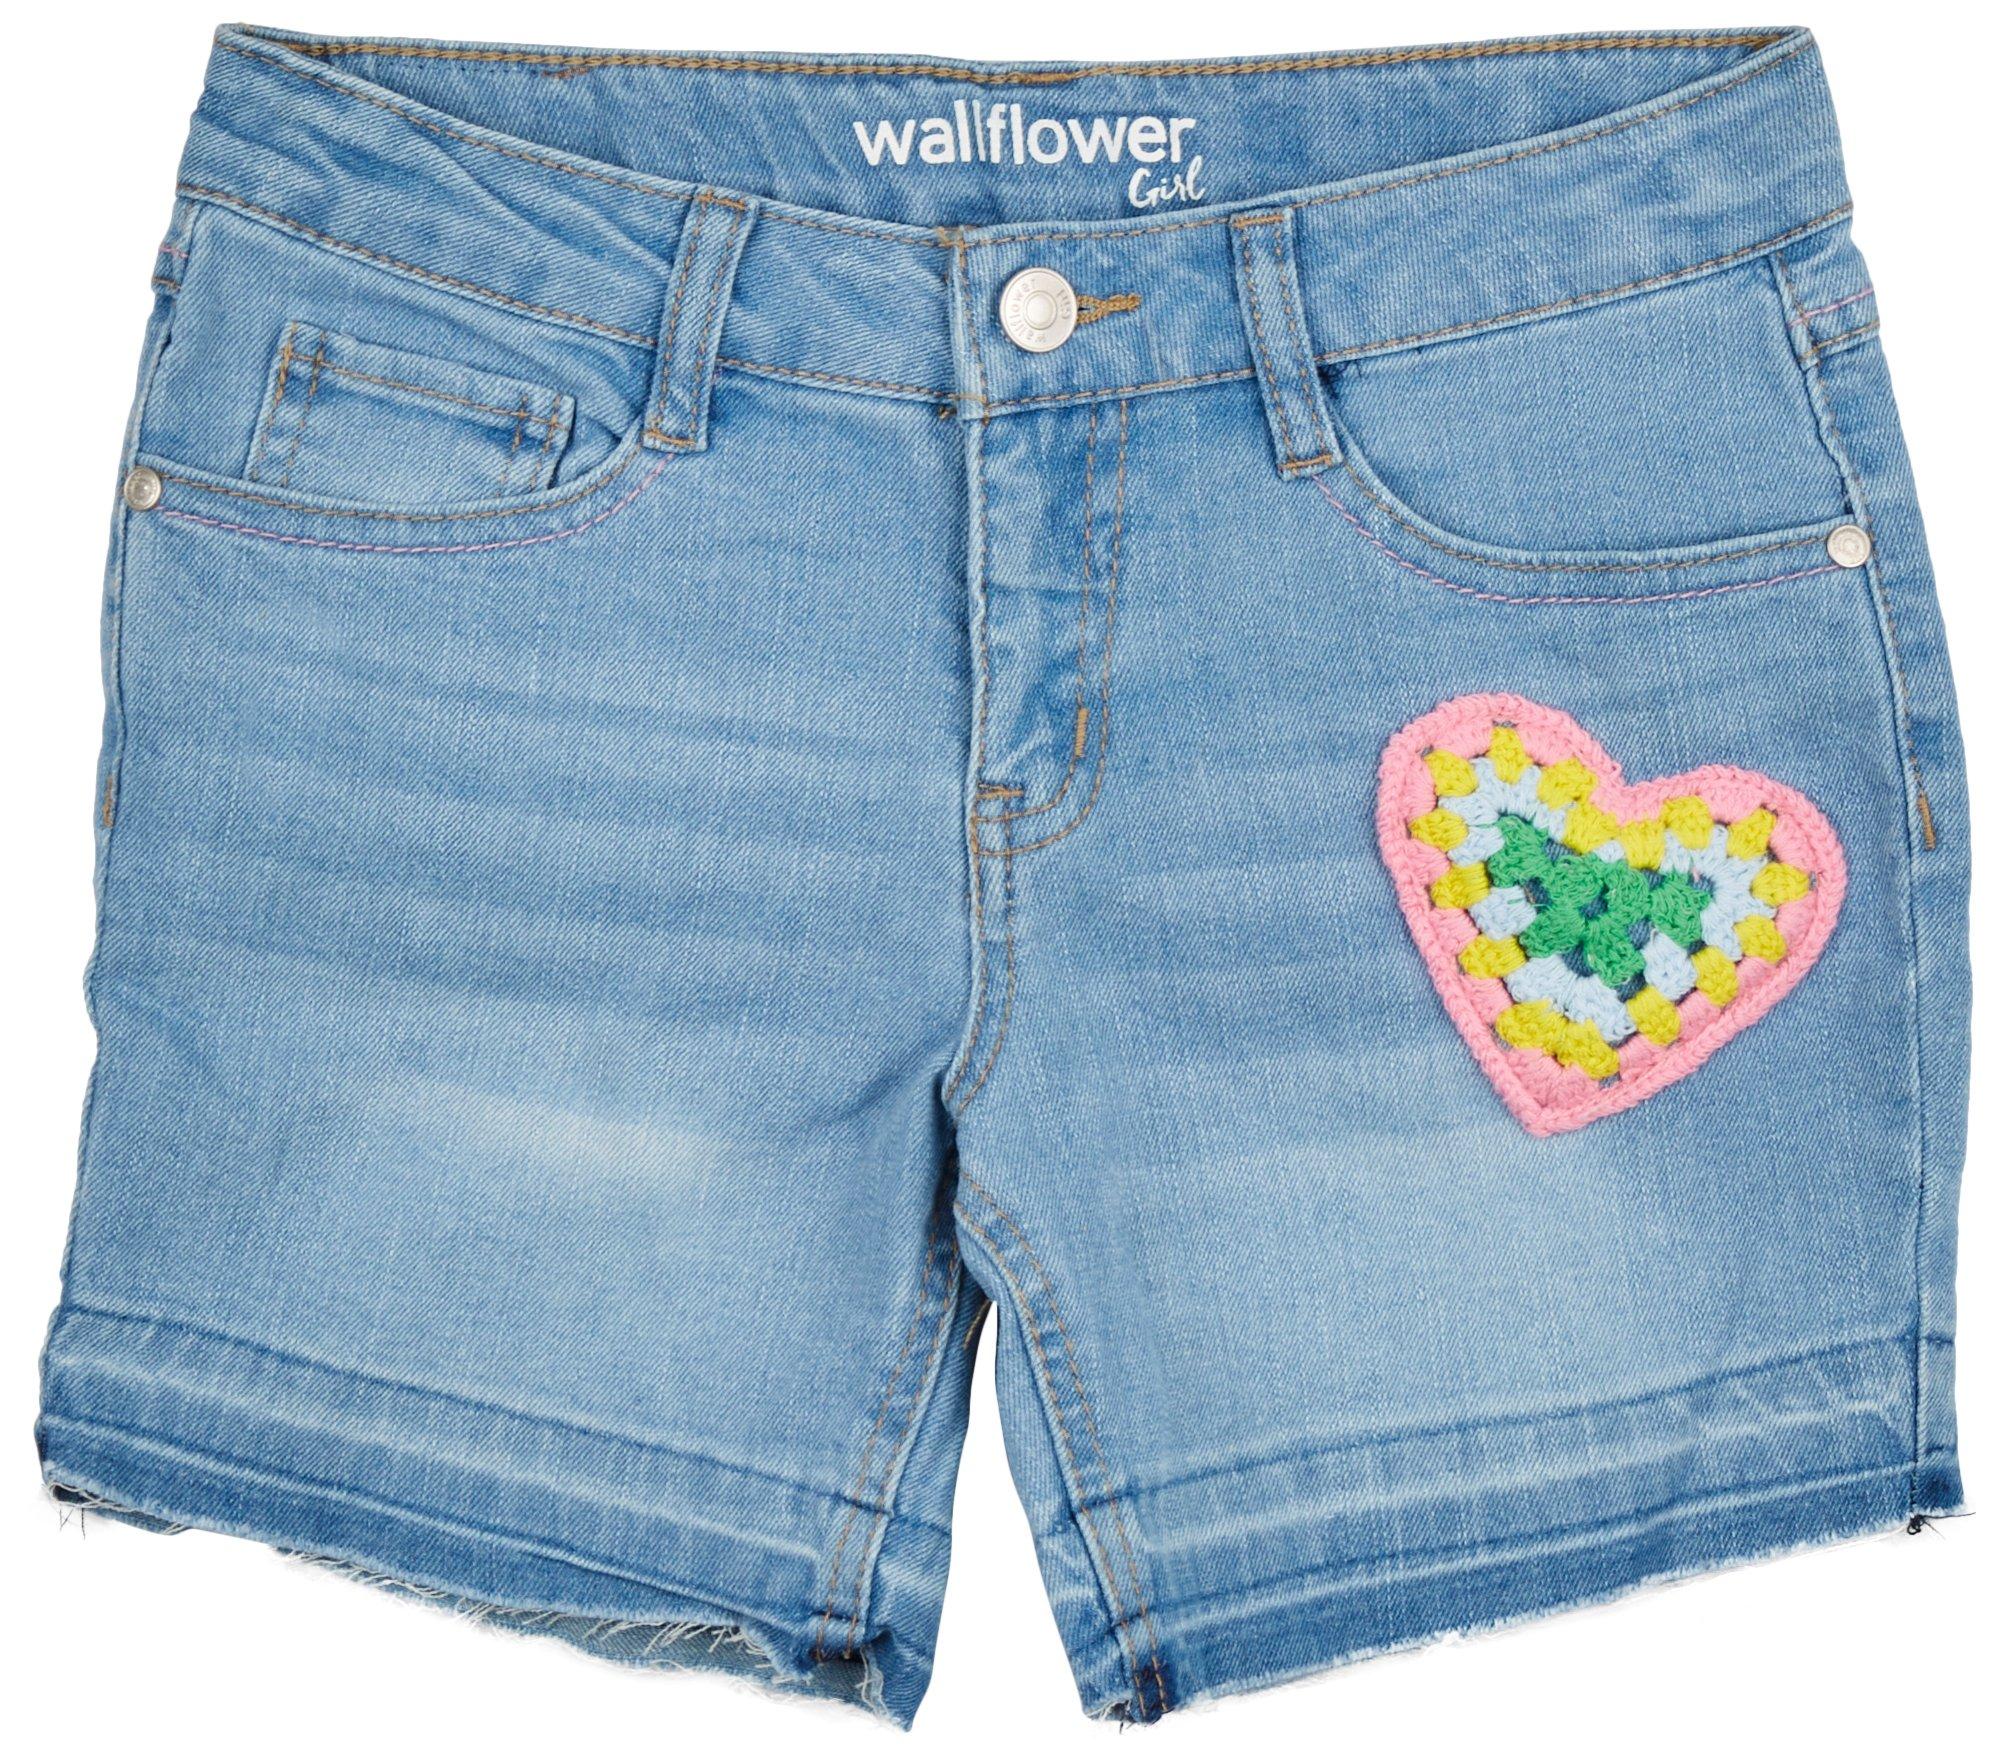 Star Ride Big Girls Embroidered Heart  Denim Shorts